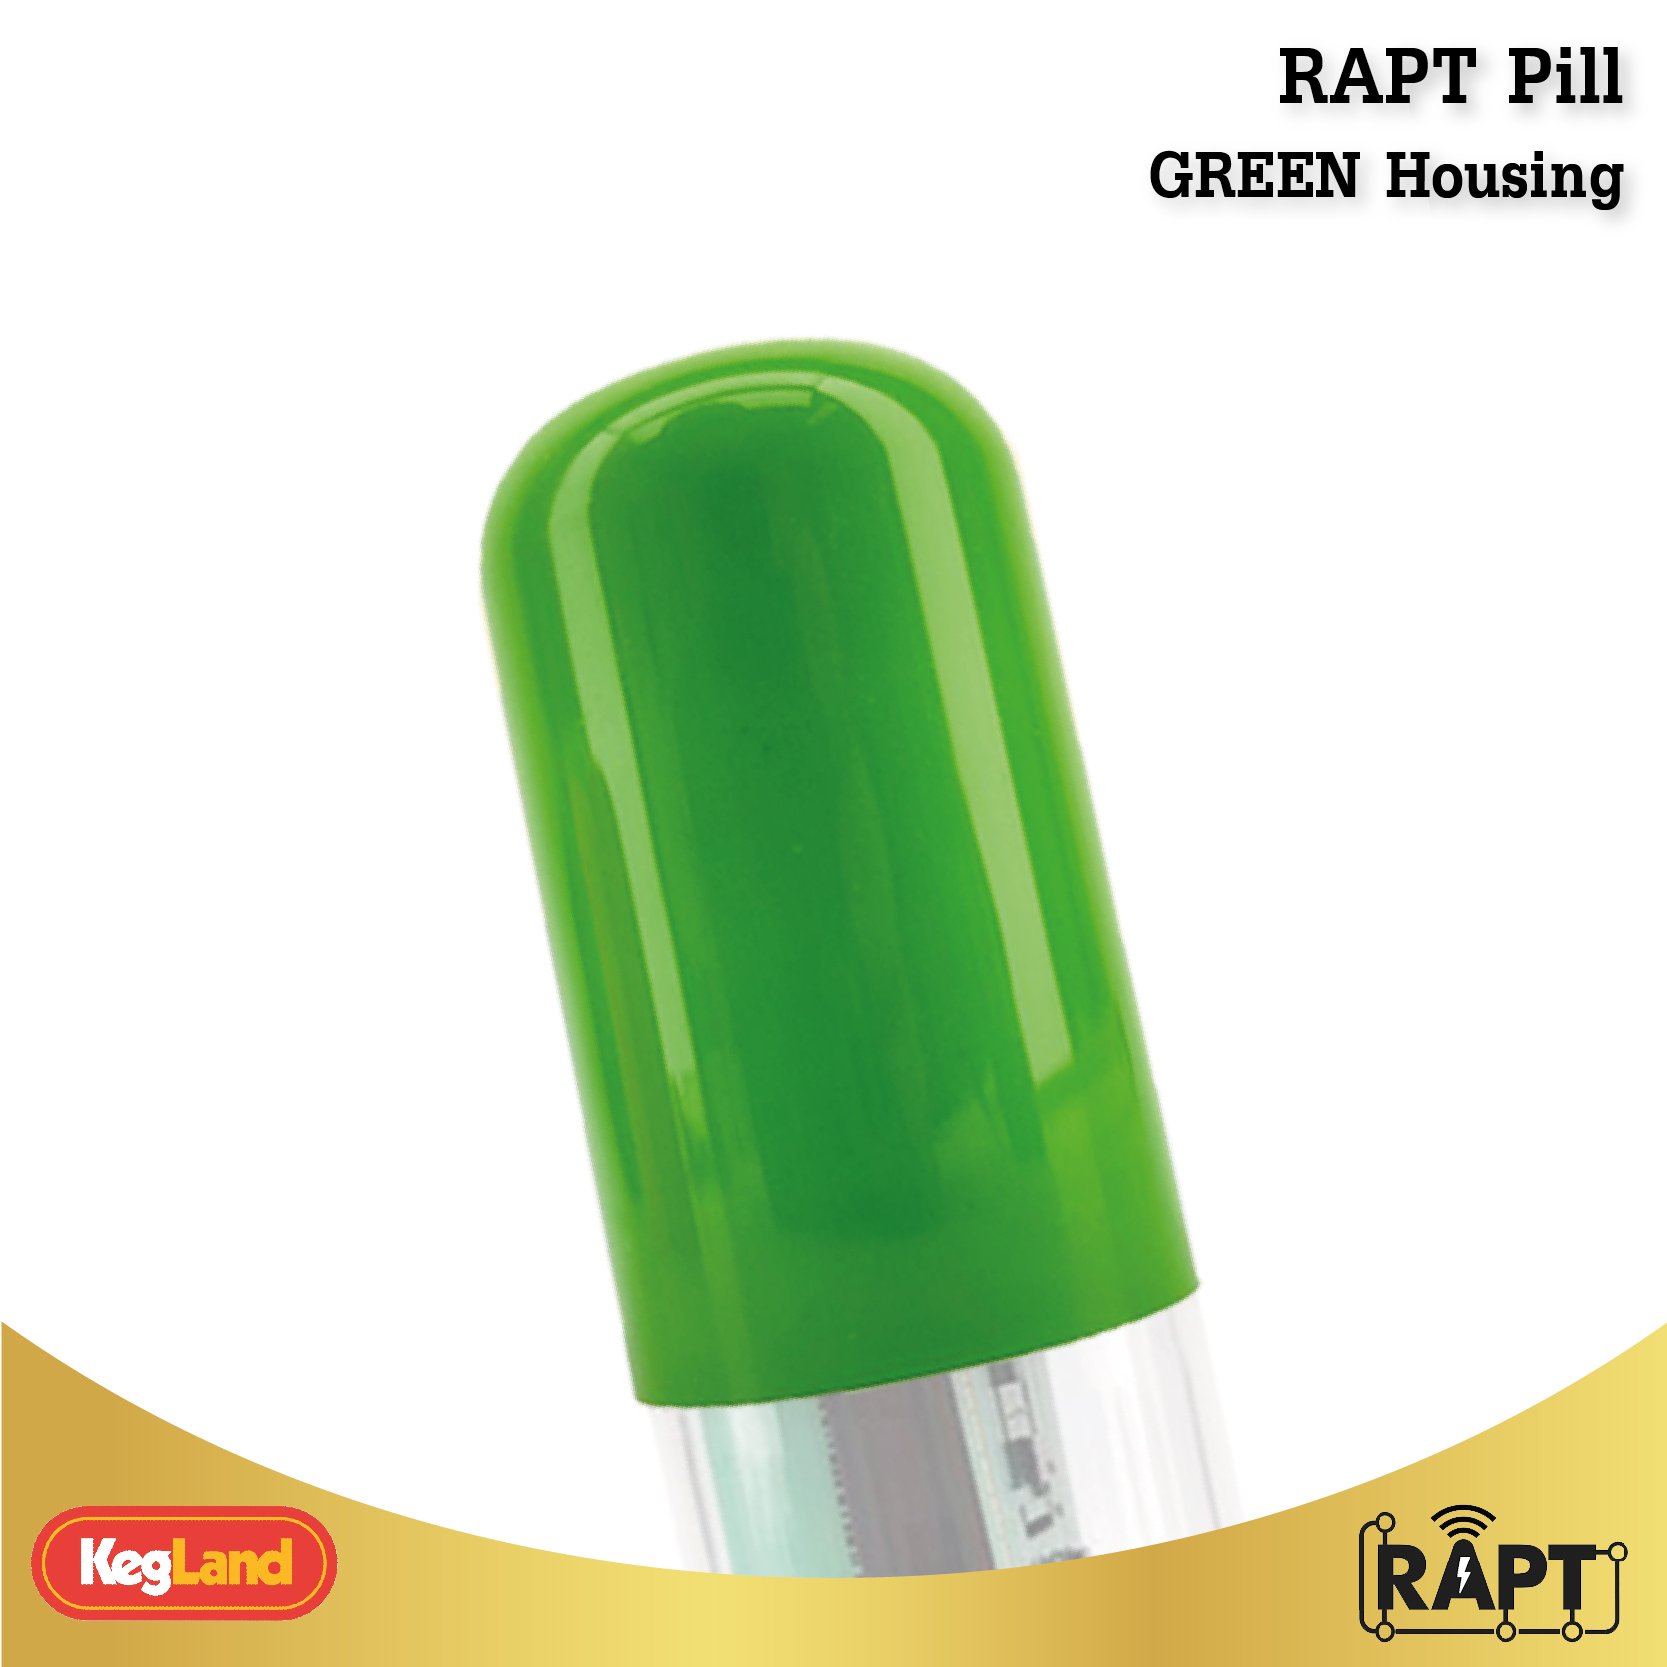 RAPT Pill - Green Housing (เฉพาะฝั่งสี)